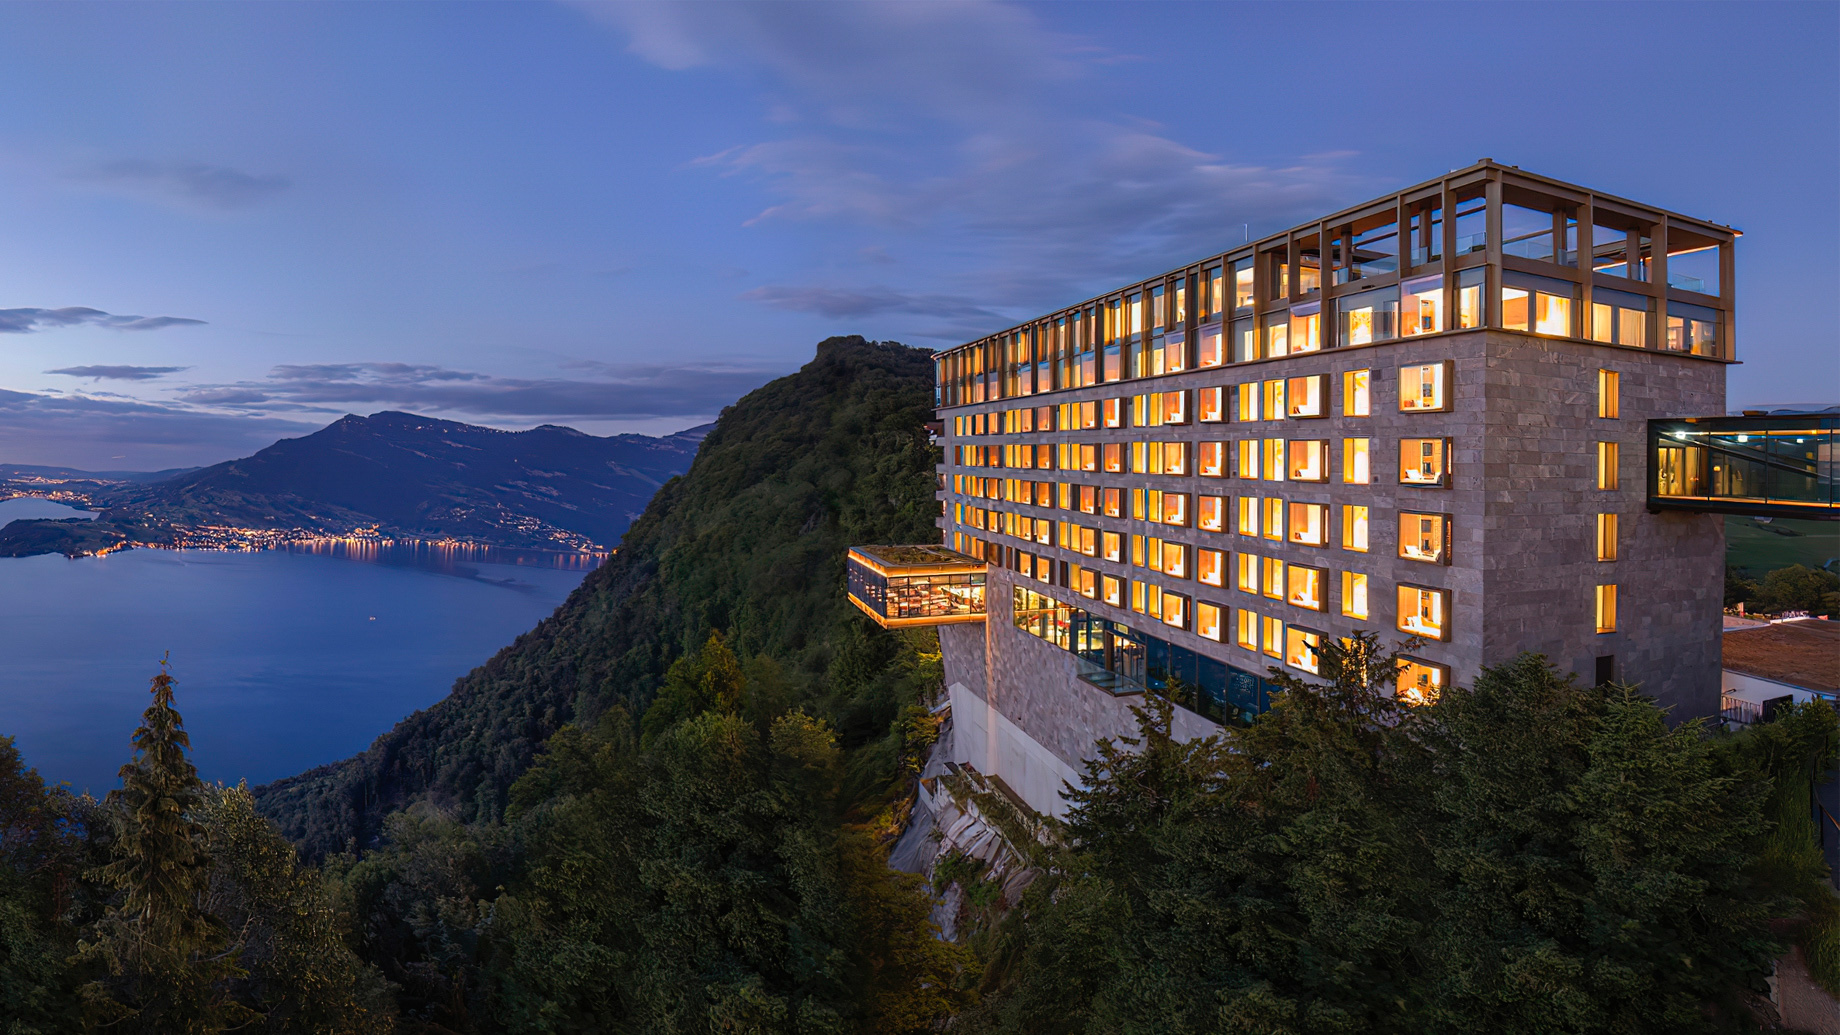 Burgenstock Hotel & Alpine Spa - Obburgen, Switzerland